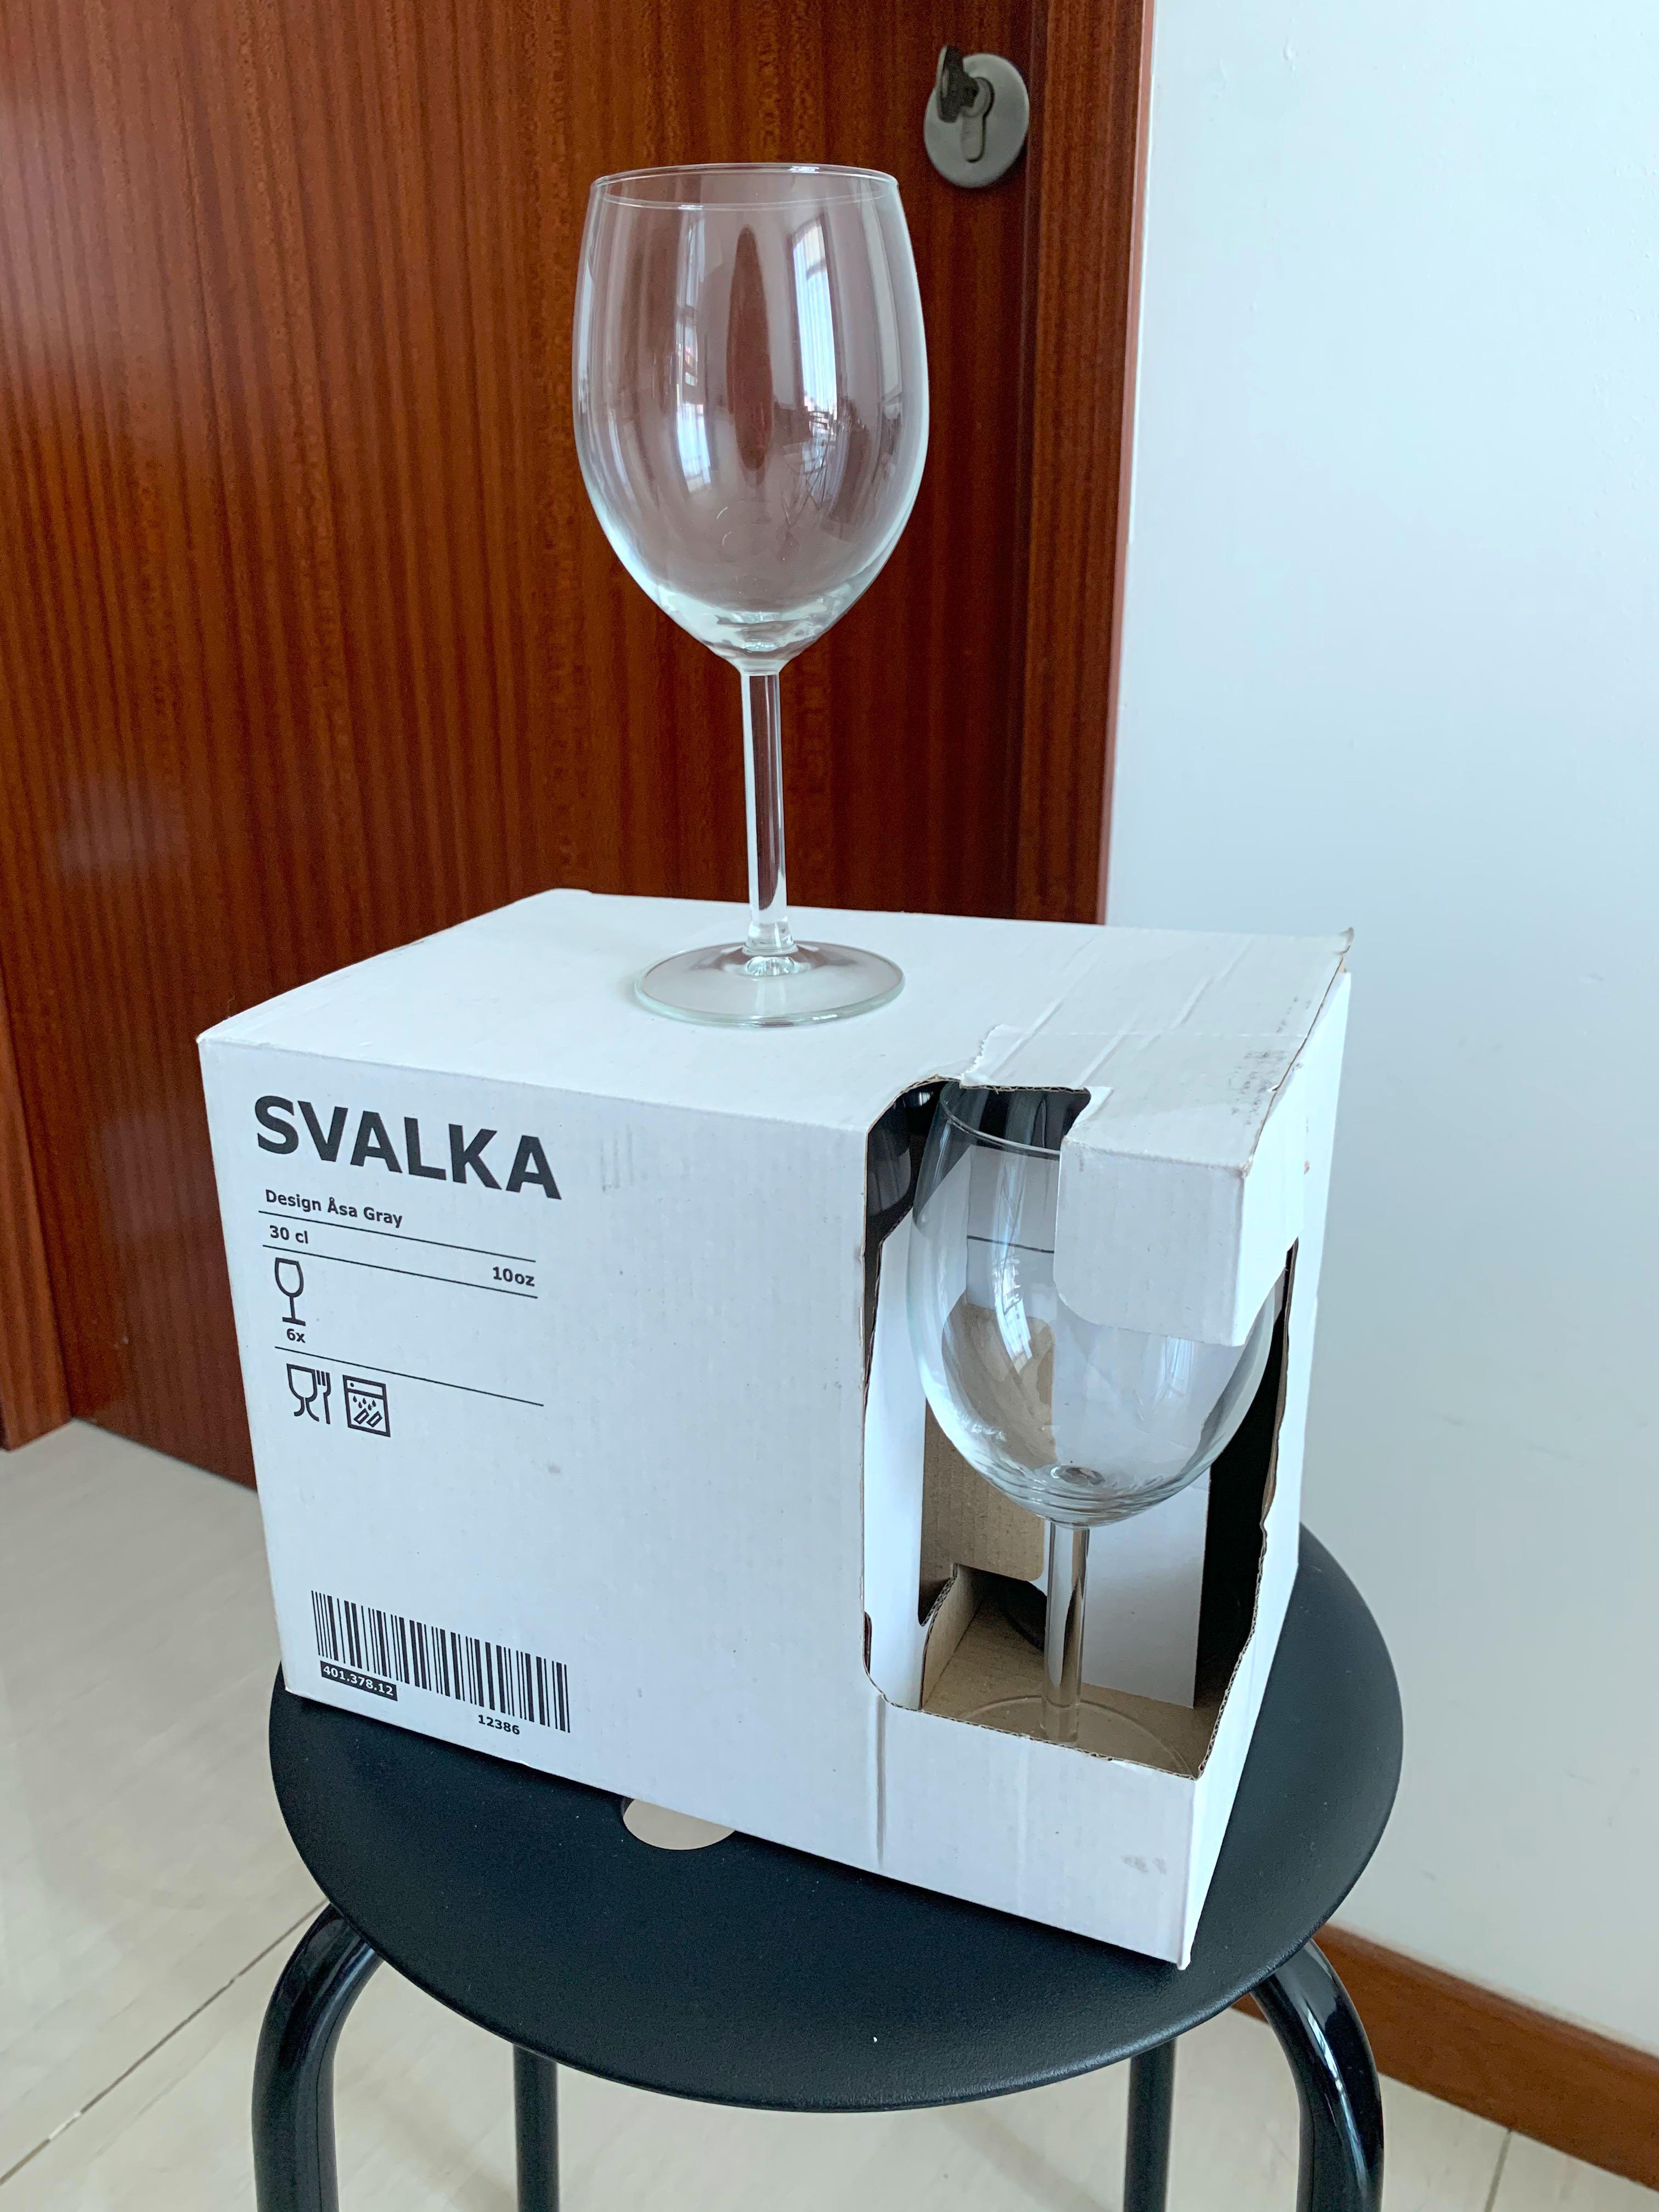 SVALKA Wine glass, clear glass - IKEA